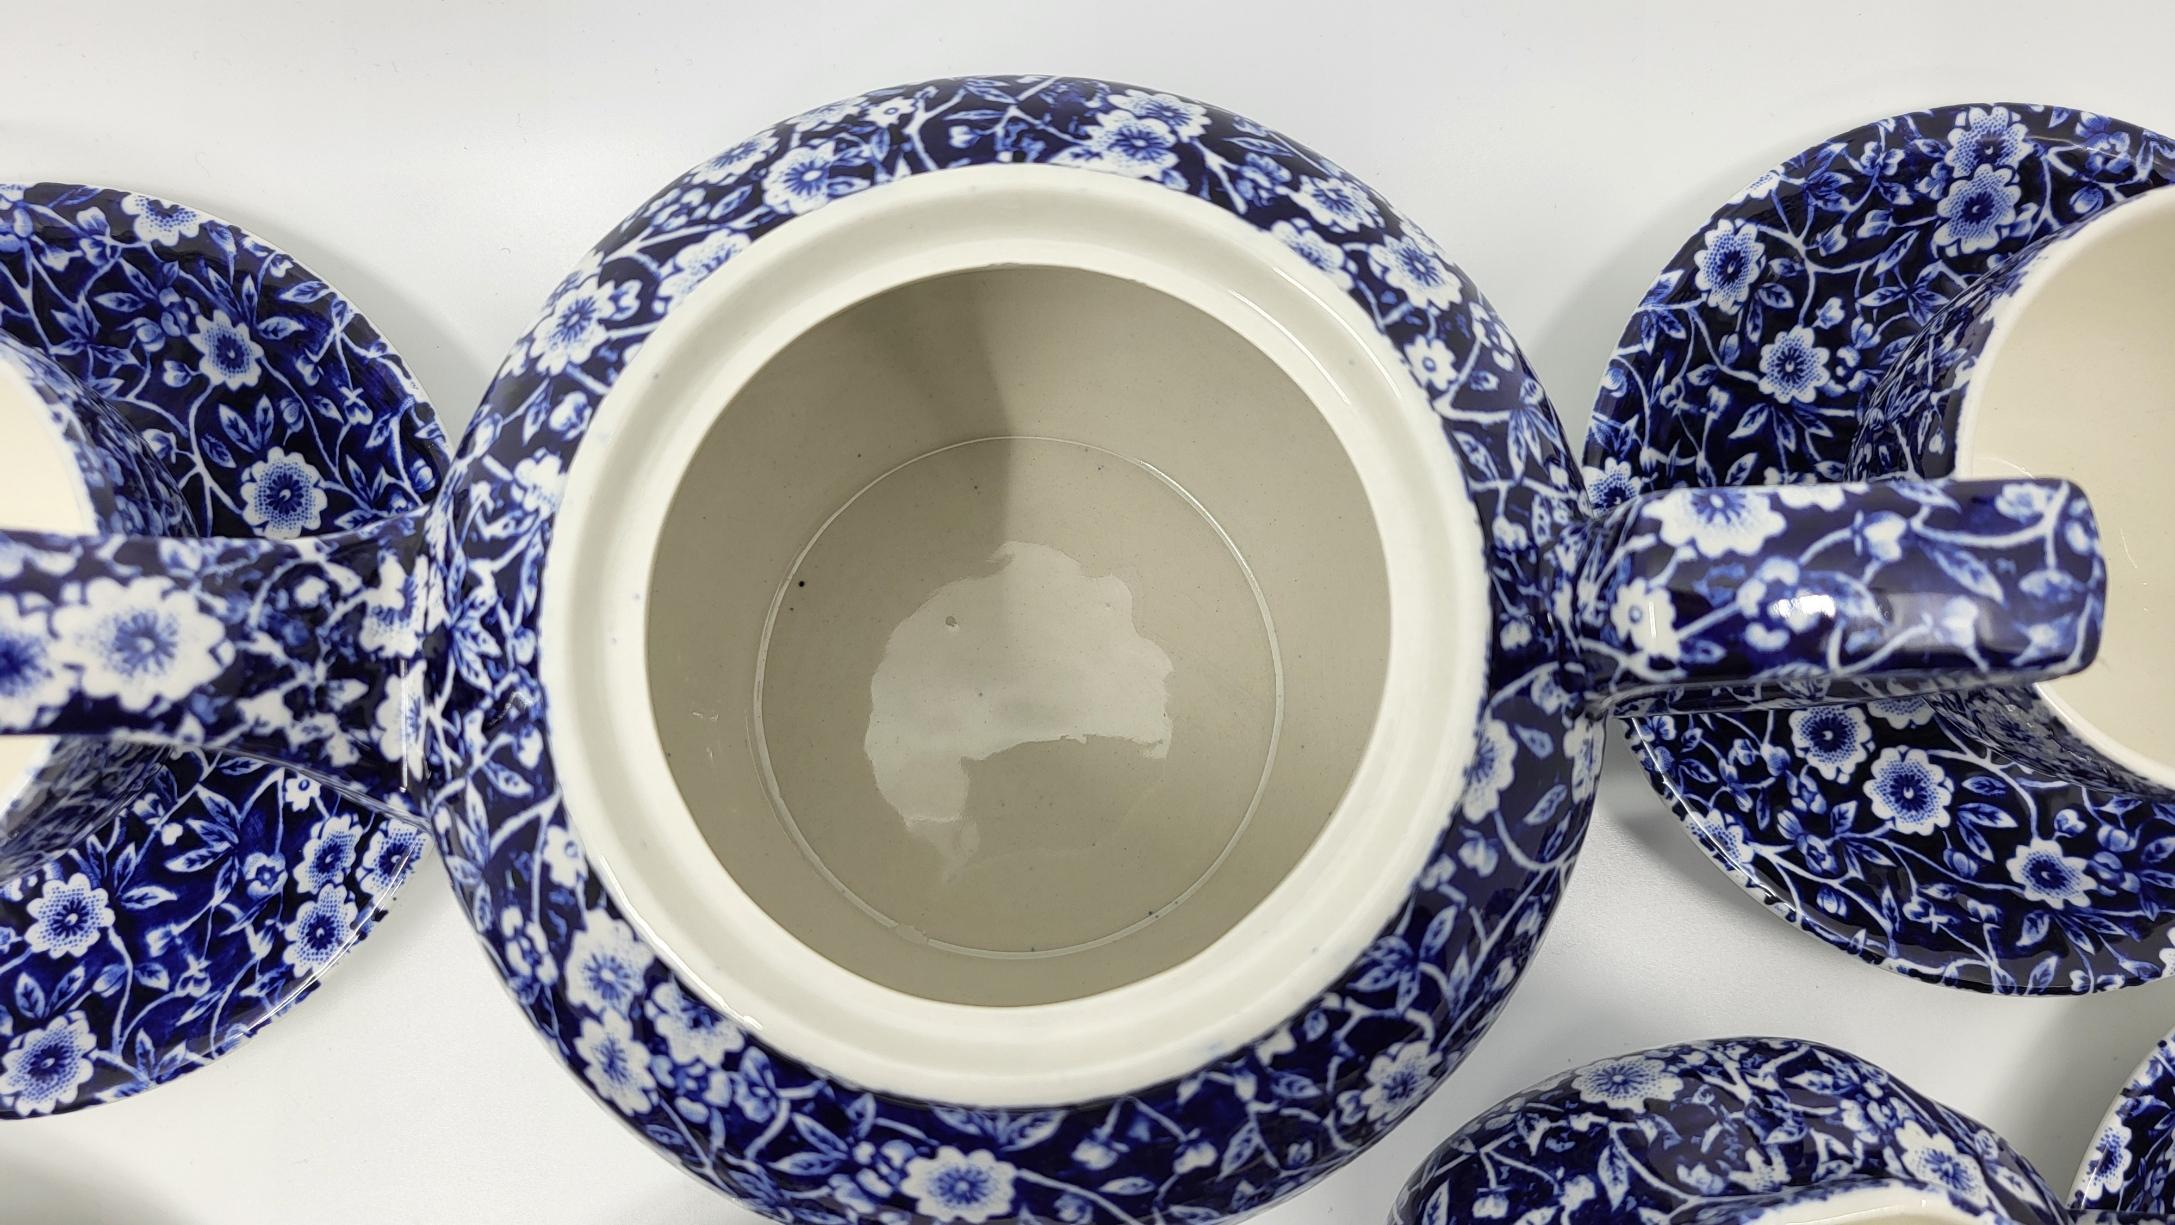 Ceramic Service à thé Calico  Burleigh Staffordshire England décor fleurs bleues 20th For Sale